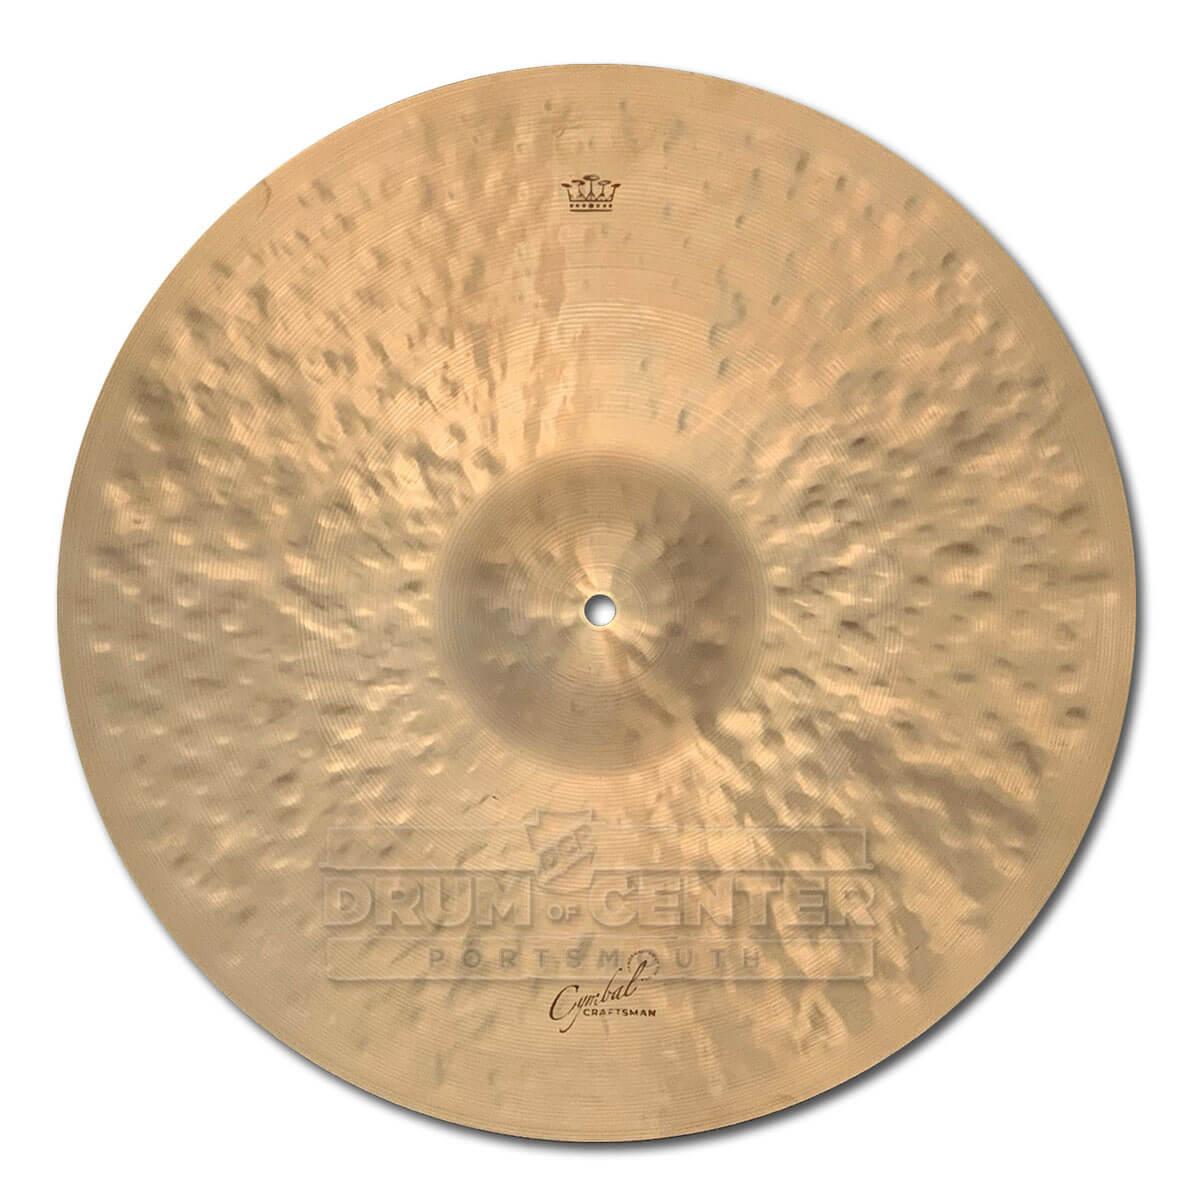 Royal Cymbals Cymbal Craftsman EAK Style Crash Cymbal 18" 1502 grams - Drum Center Of Portsmouth